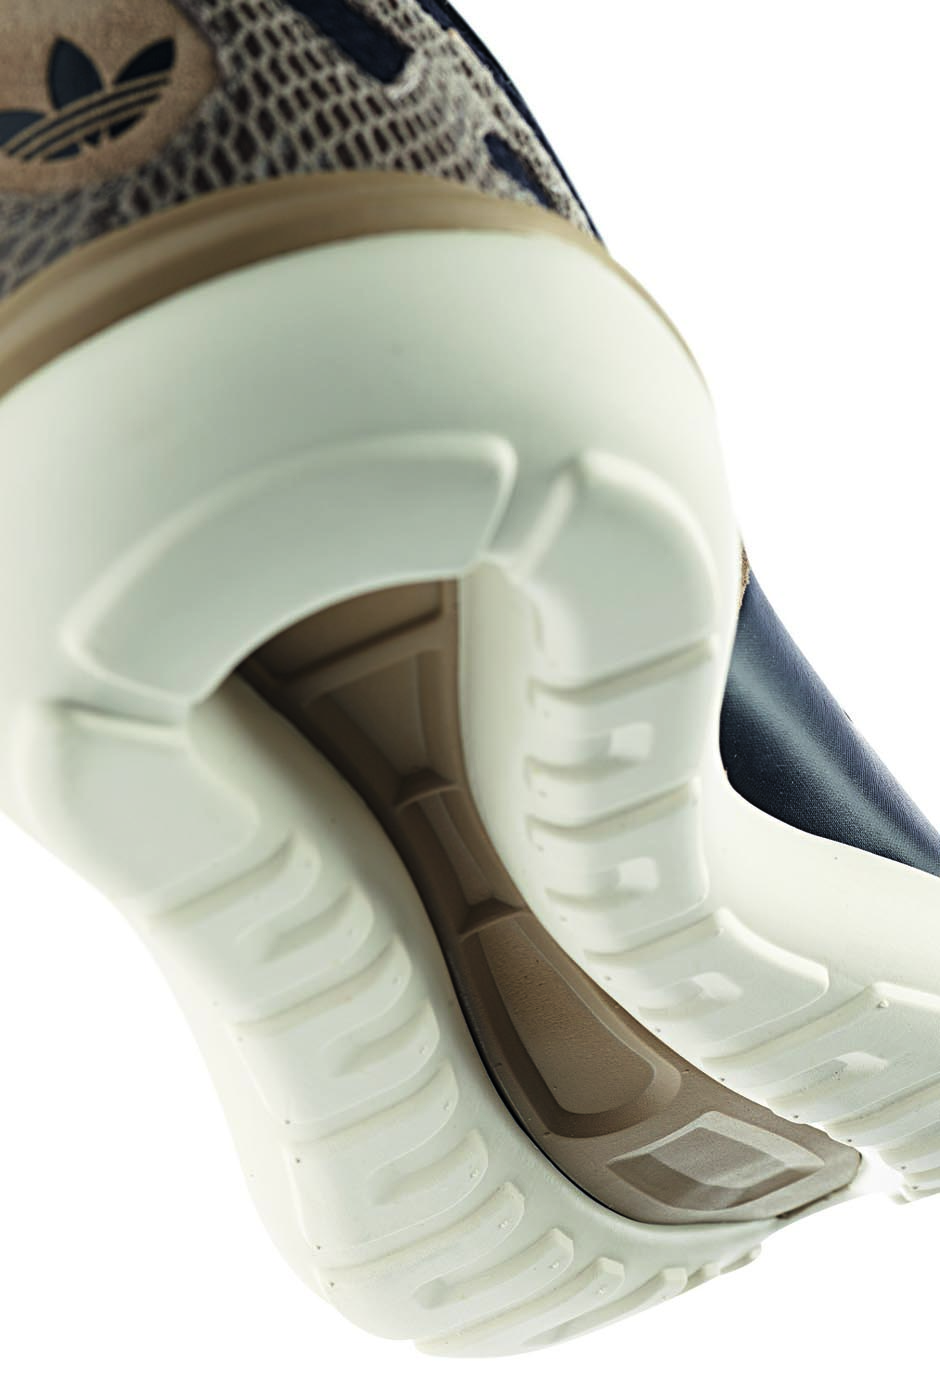 Adidas Originals Dresses Tubular In Snakeskin 06